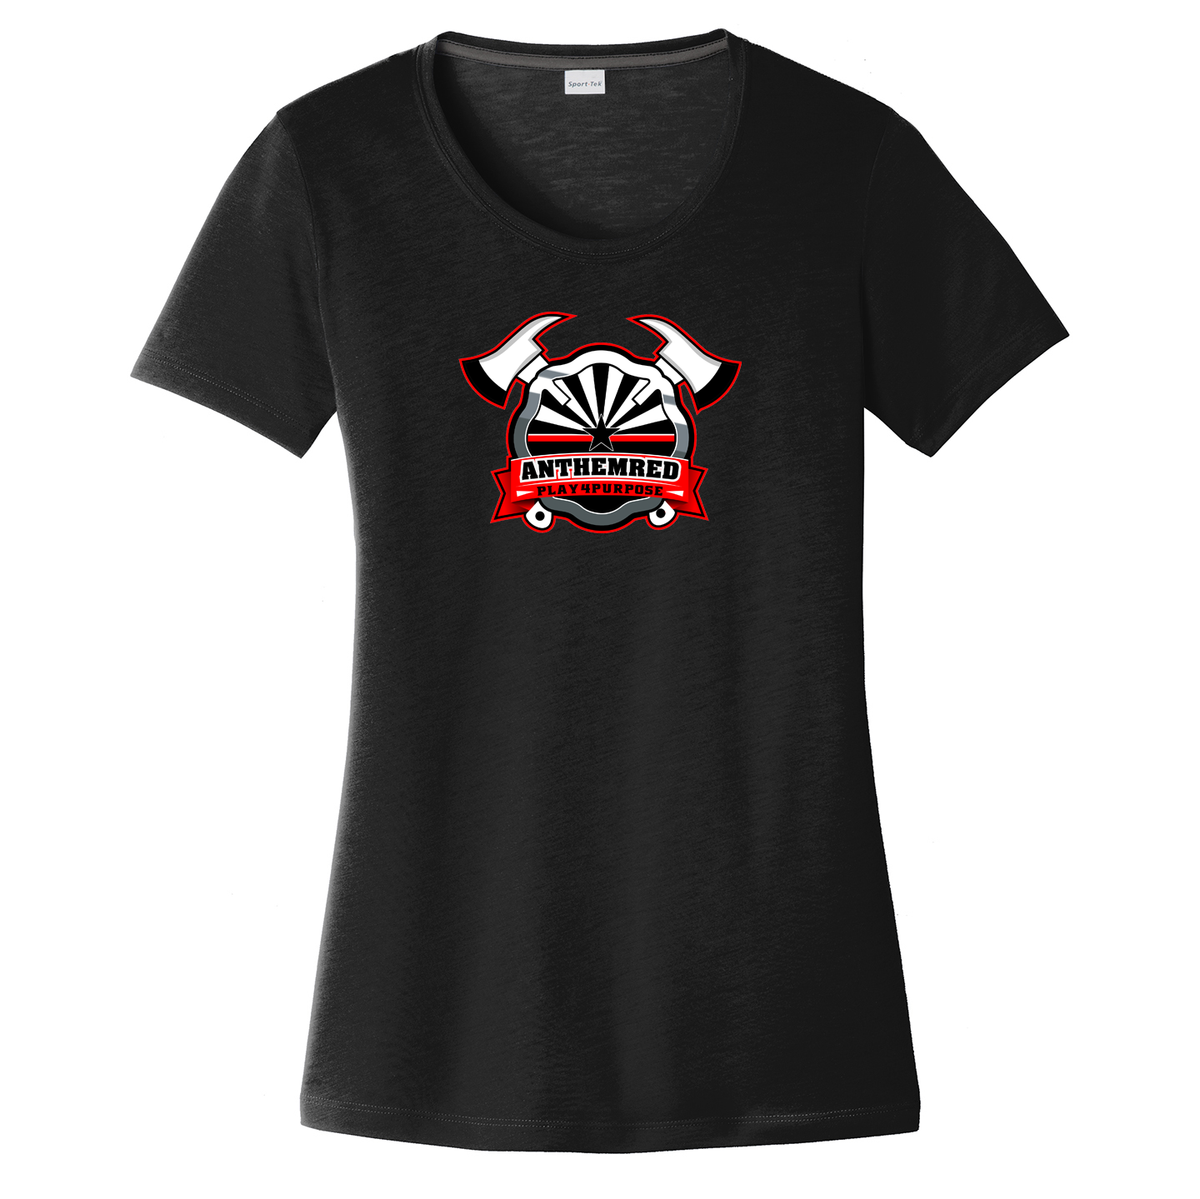 Anthem Red Softball Women's CottonTouch Performance T-Shirt